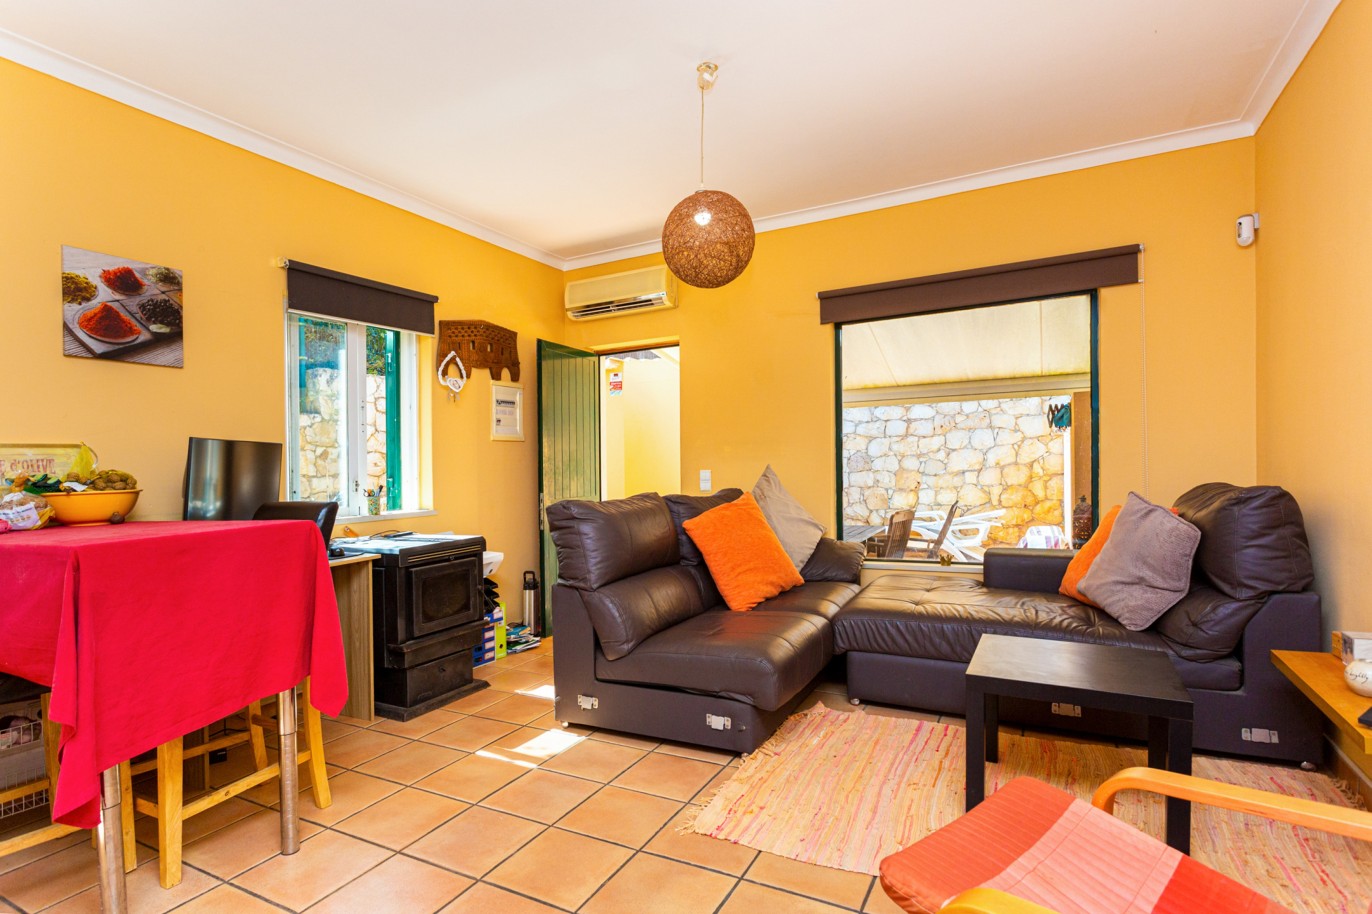 5 Bedroom Villa with 2 Bedroom Annex, for sale, in Alvor, Algarve_220973